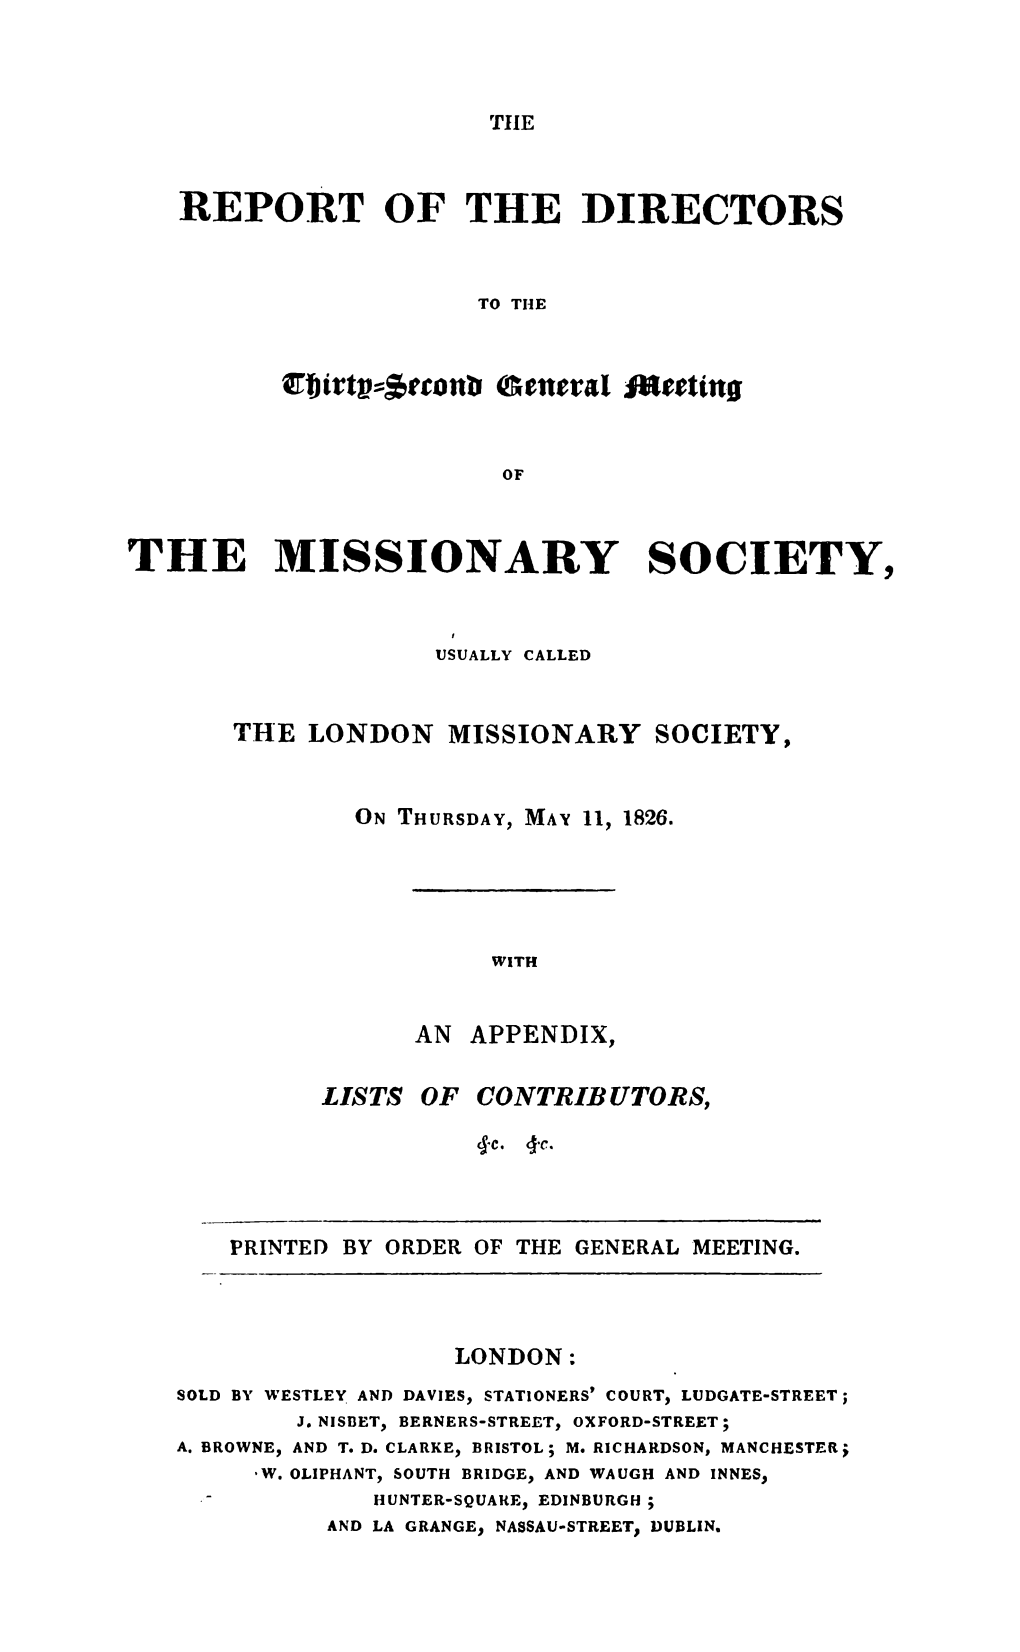 The Missionary Society